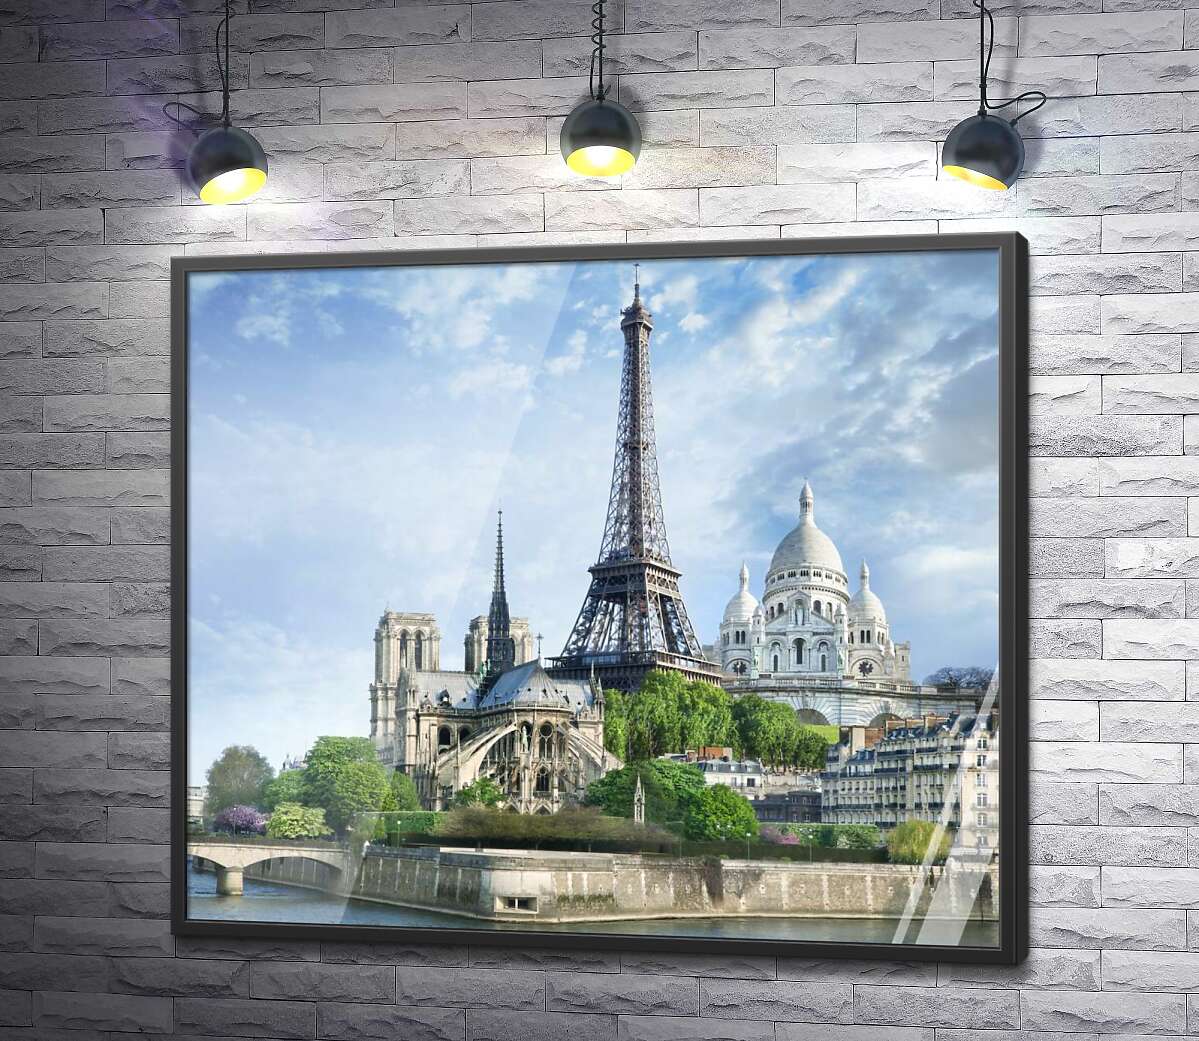 постер Архітектурні твори Парижа: Ейфелева вежа (Eiffel tower), Нотр-Дам-де-Парі (Notre Dame de Paris), базиліка Сакре-Кер (Basilique du Sacre Cœur)